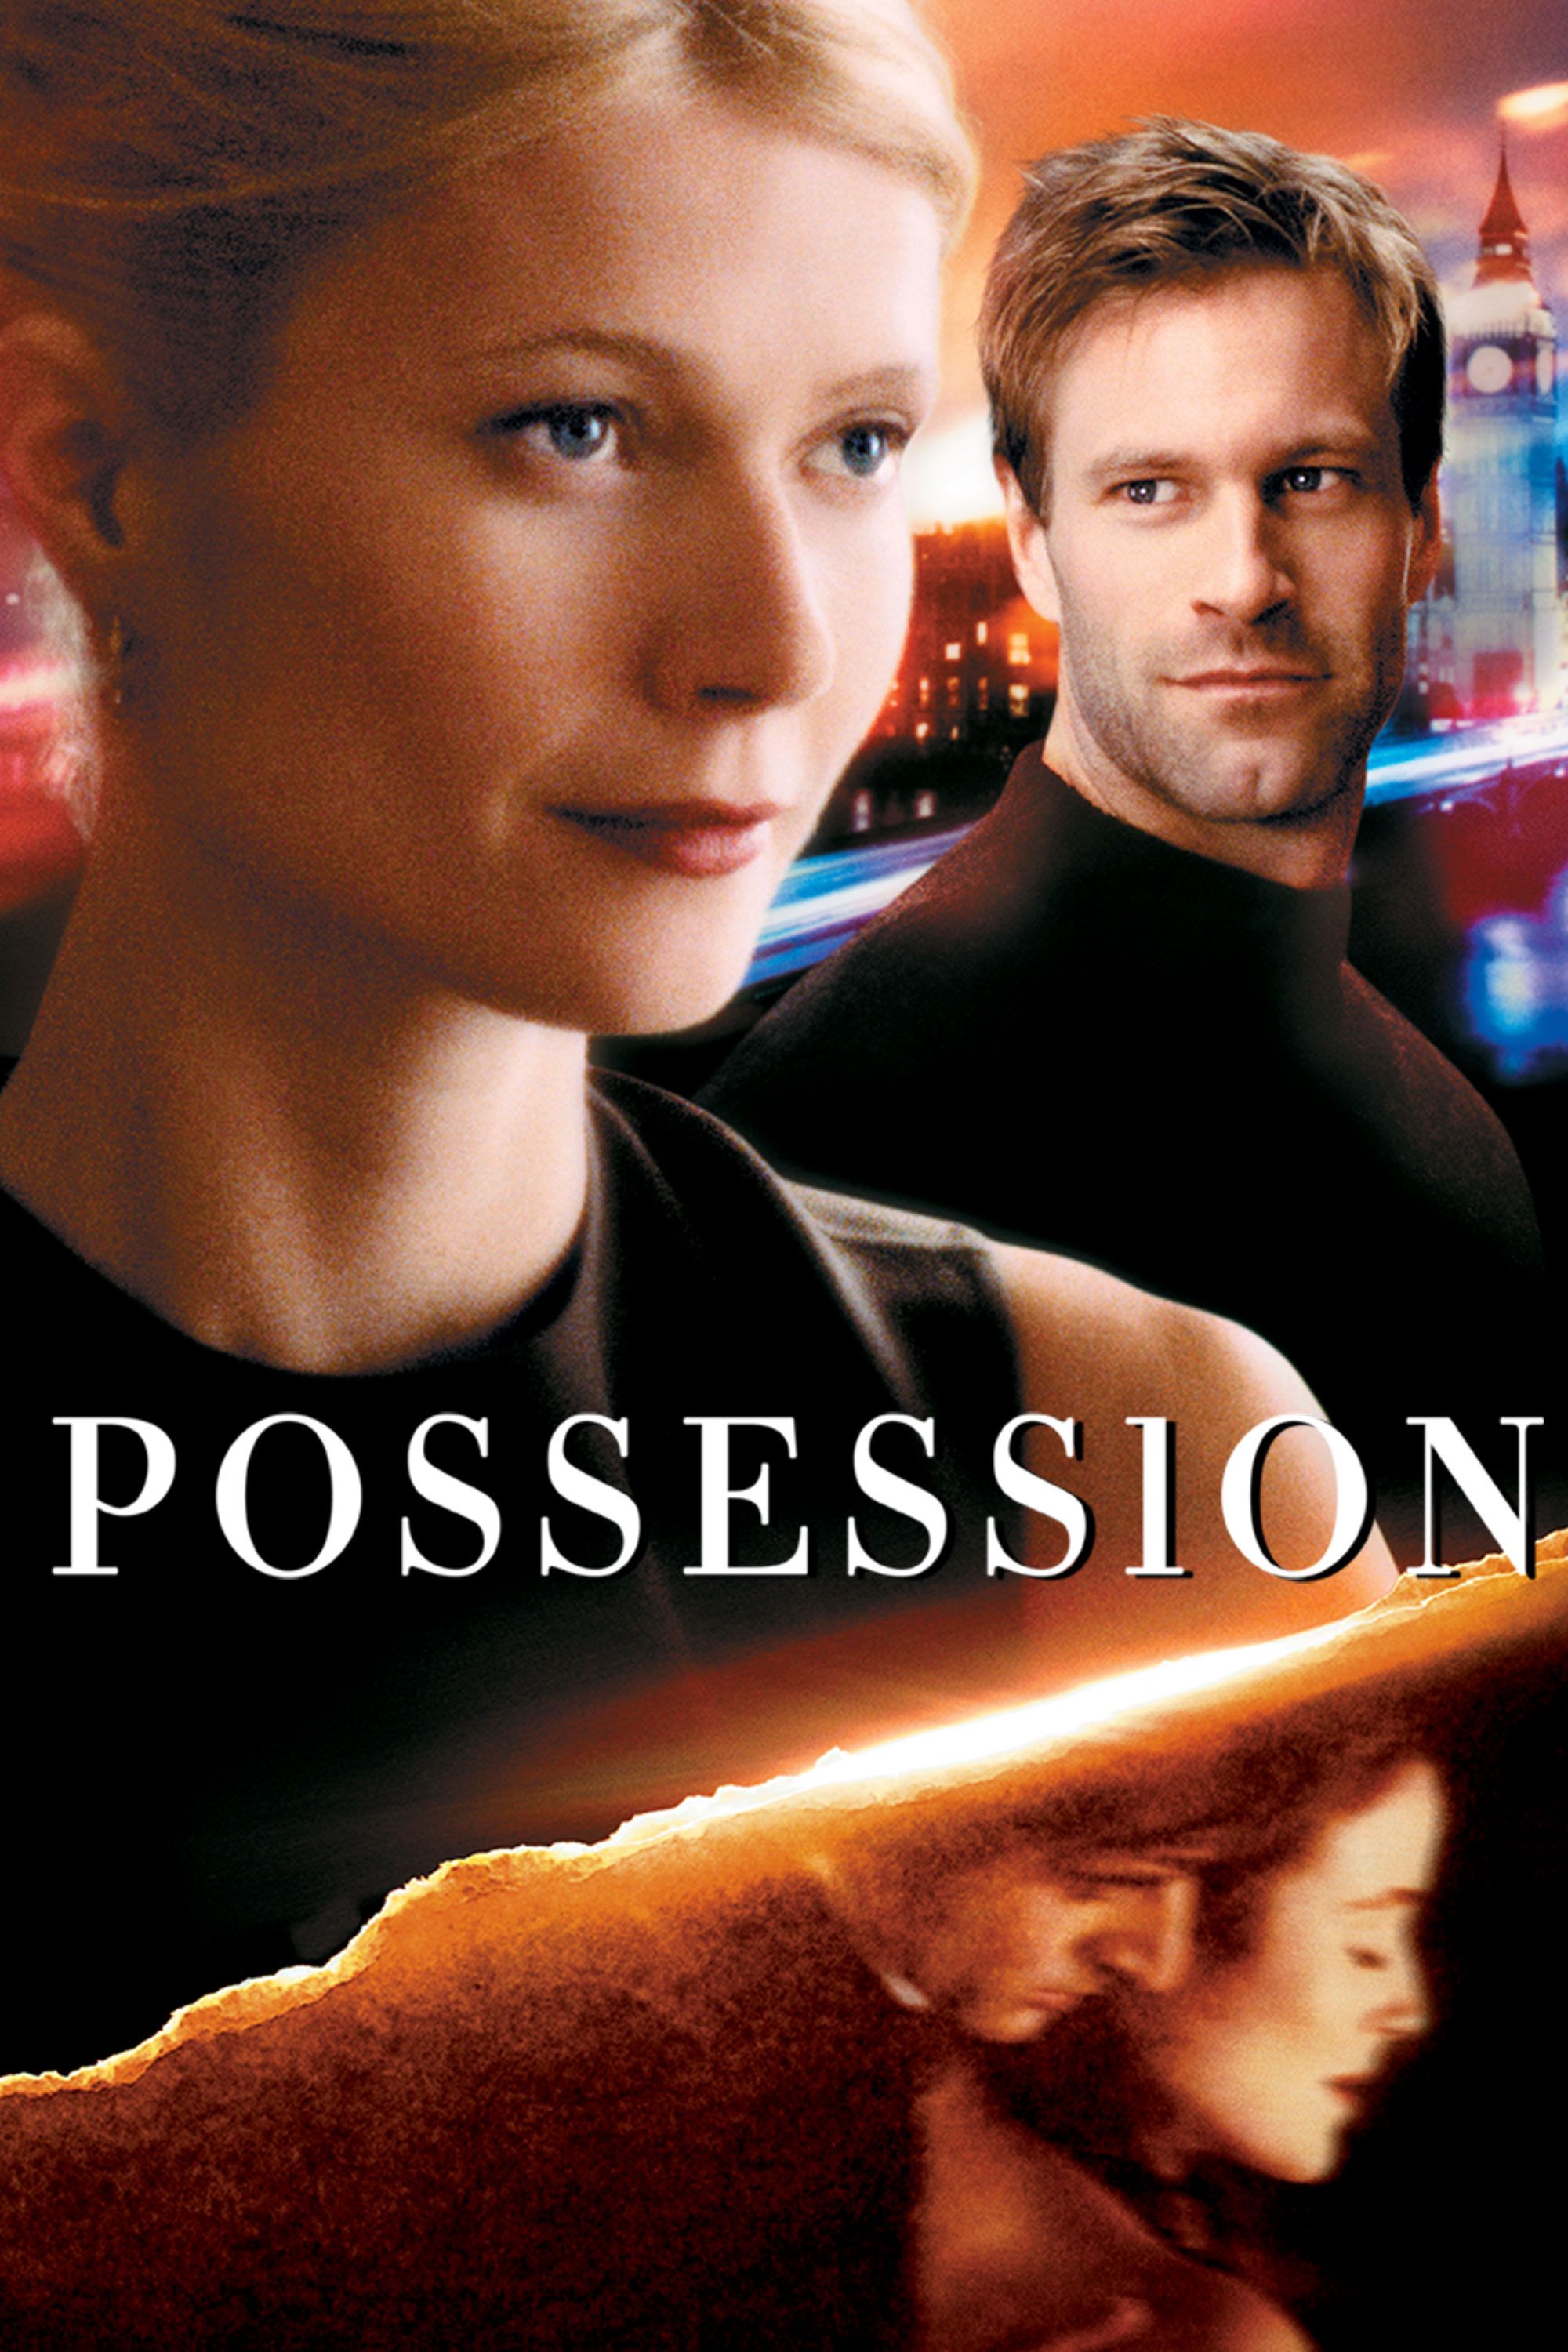 The Possession Full Movie